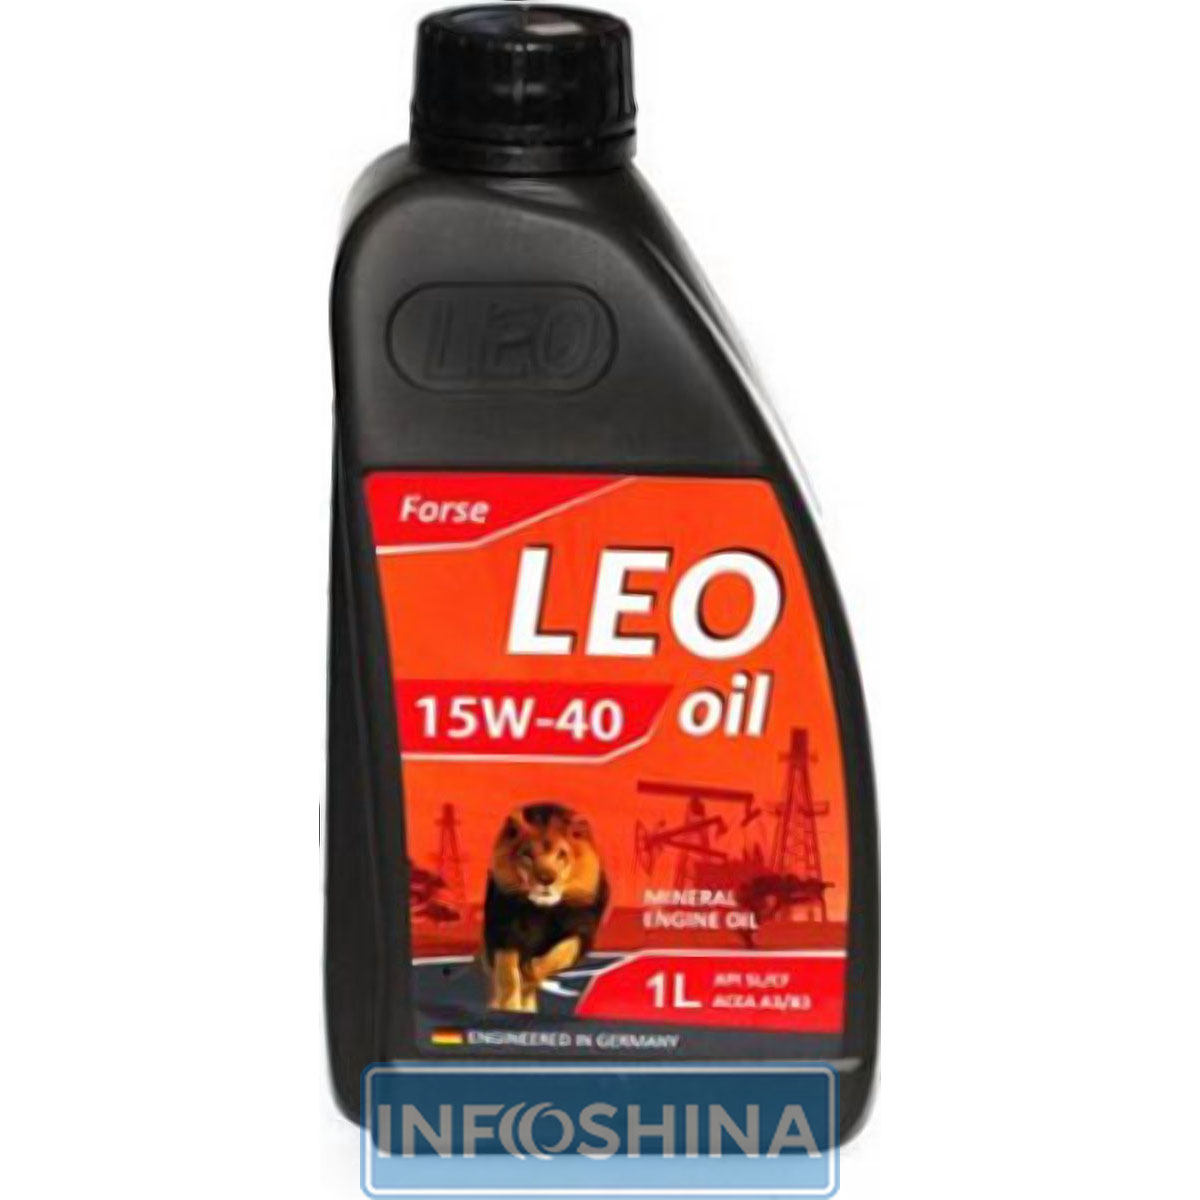 LEO OIL Forse SAE 15W-40